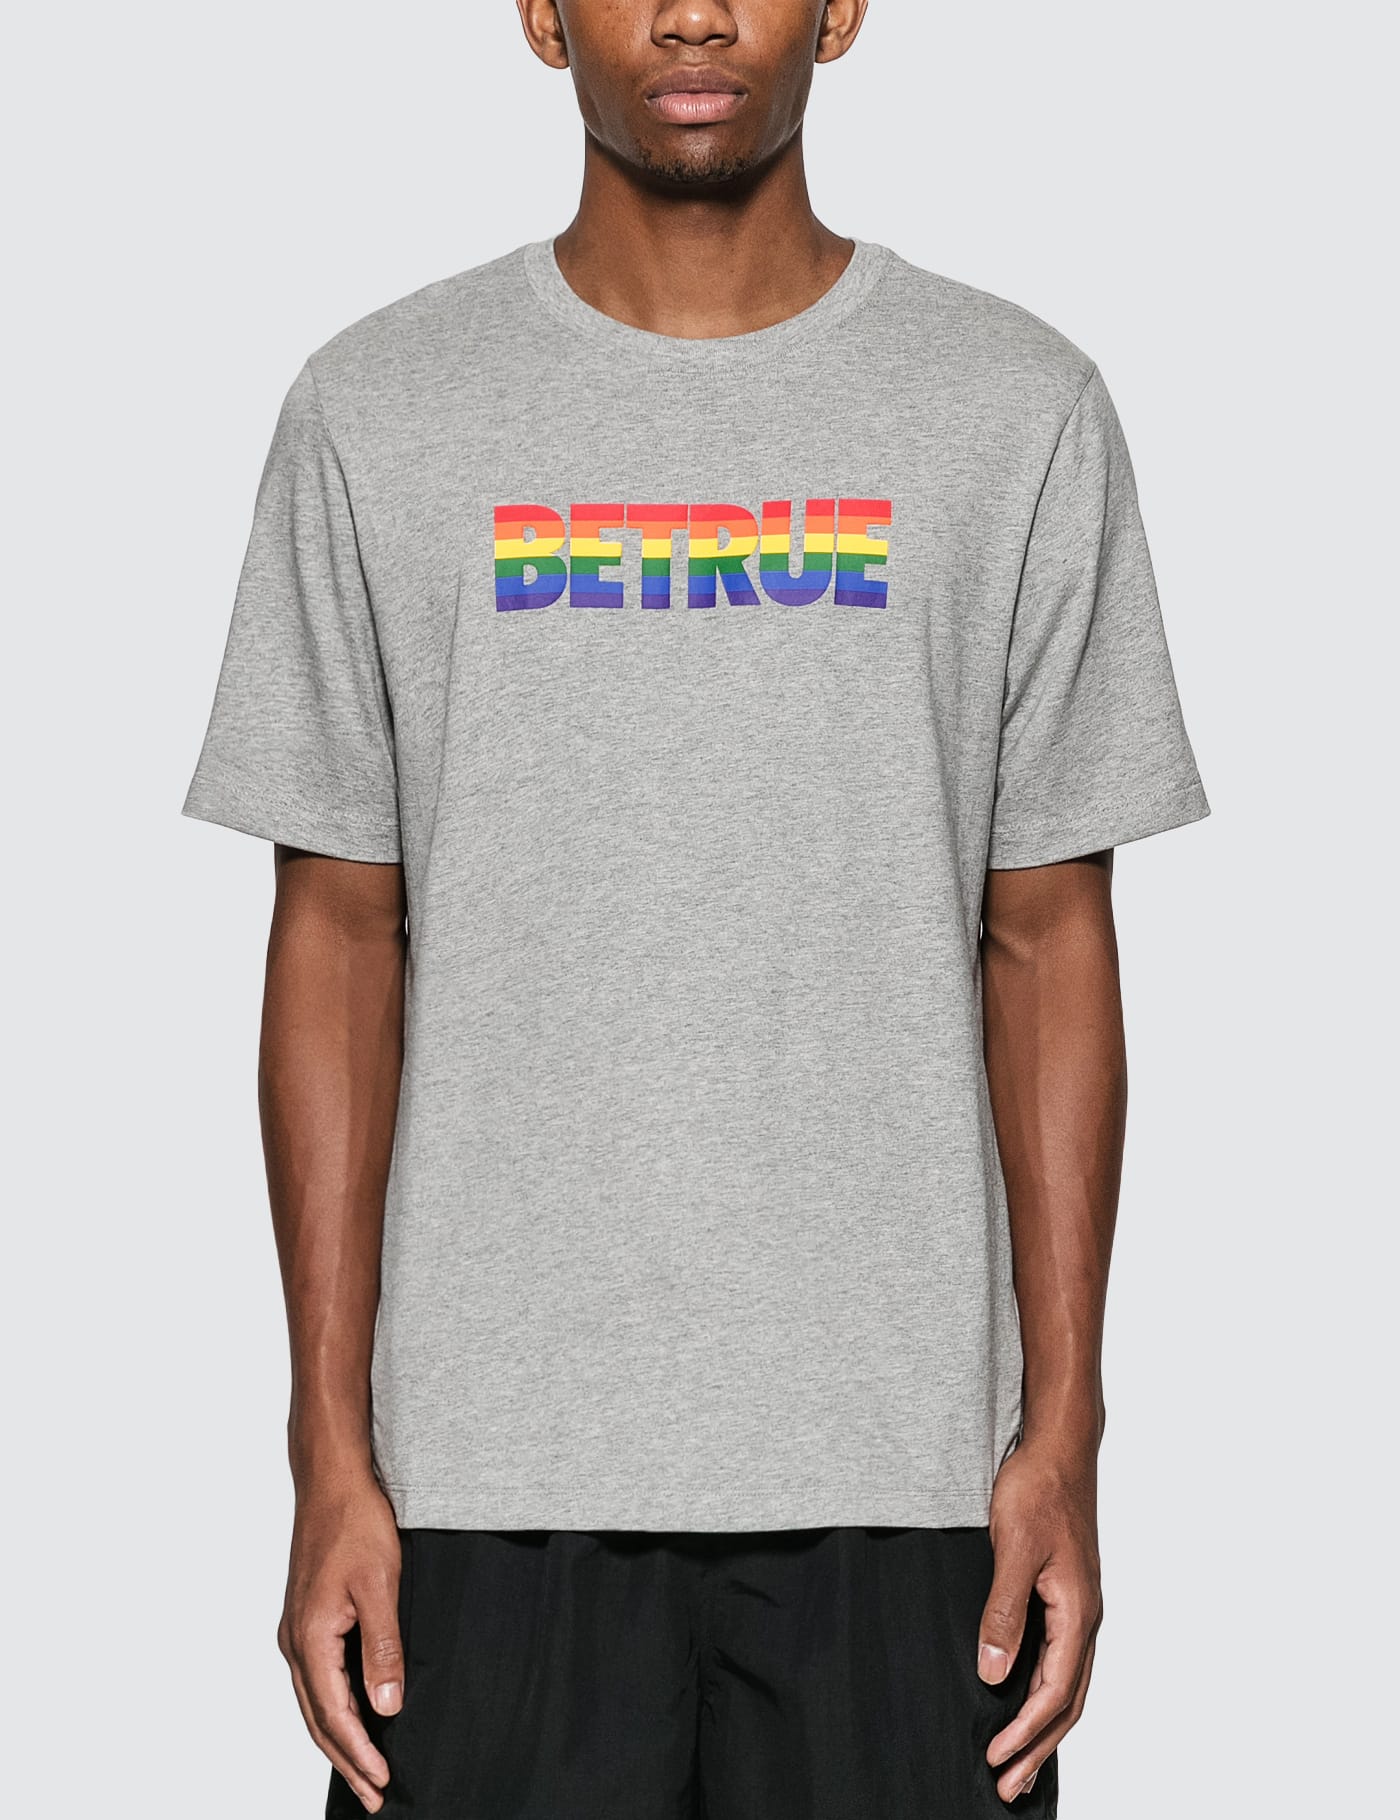 Nike - Nike Sportswear BETRUE T-Shirt | HBX